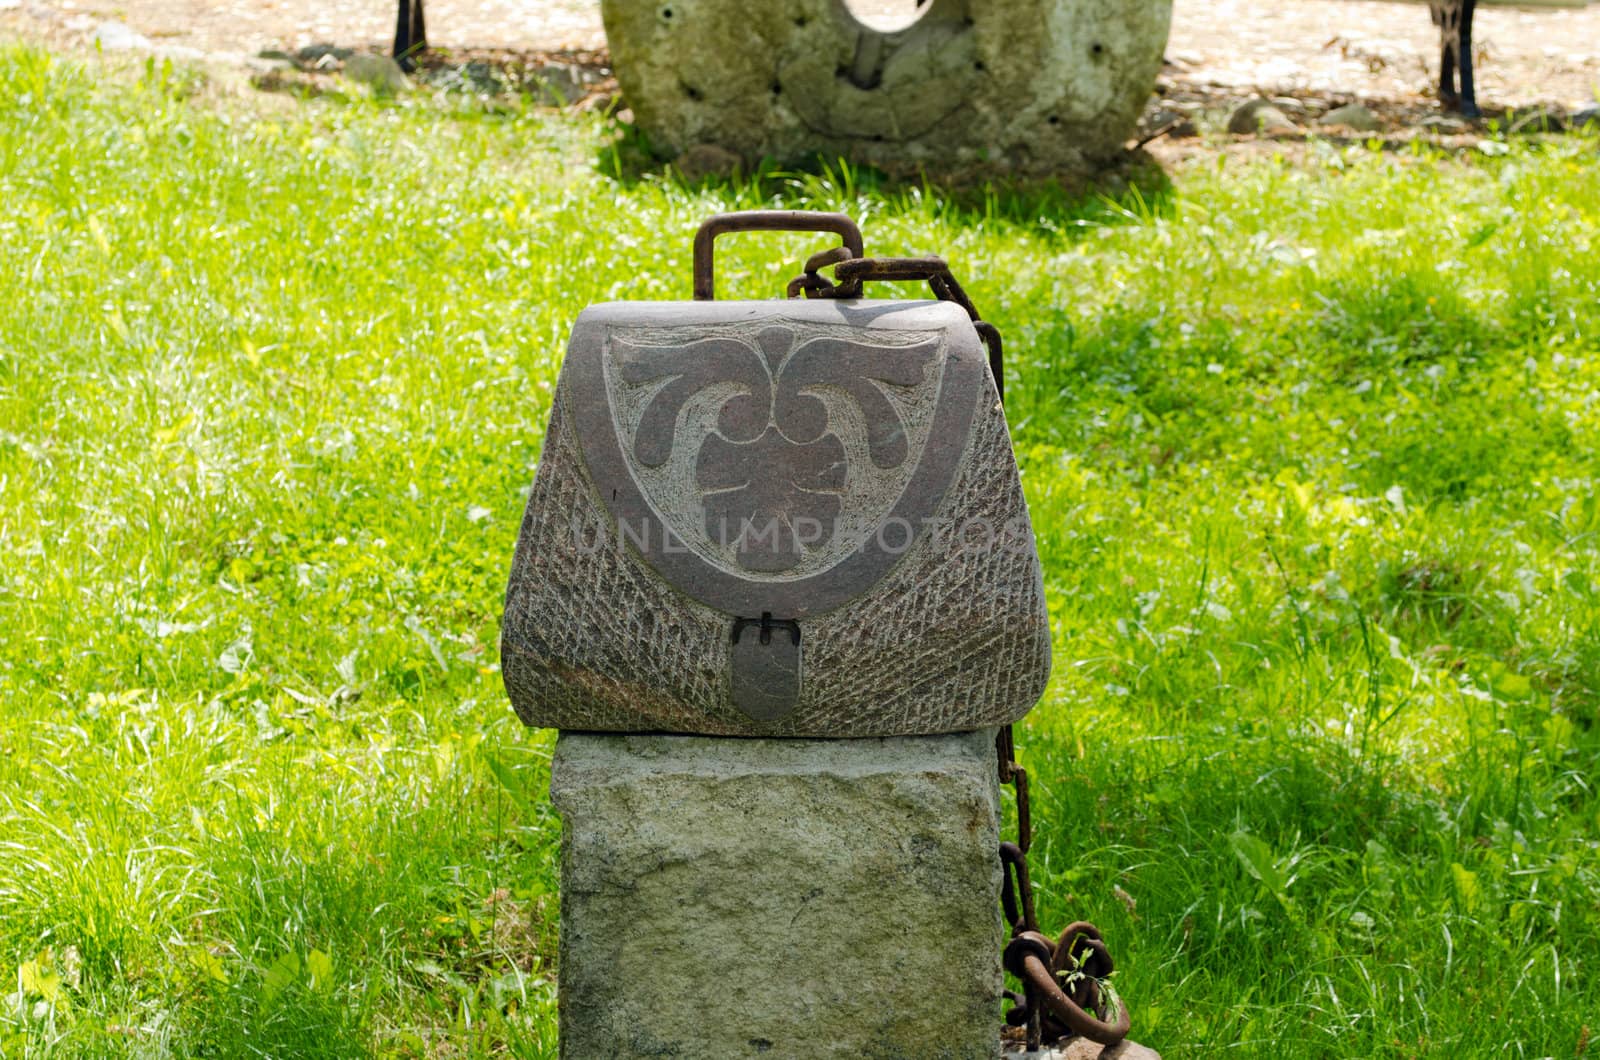 Woman handbag imitation made of stone with rusty chain.